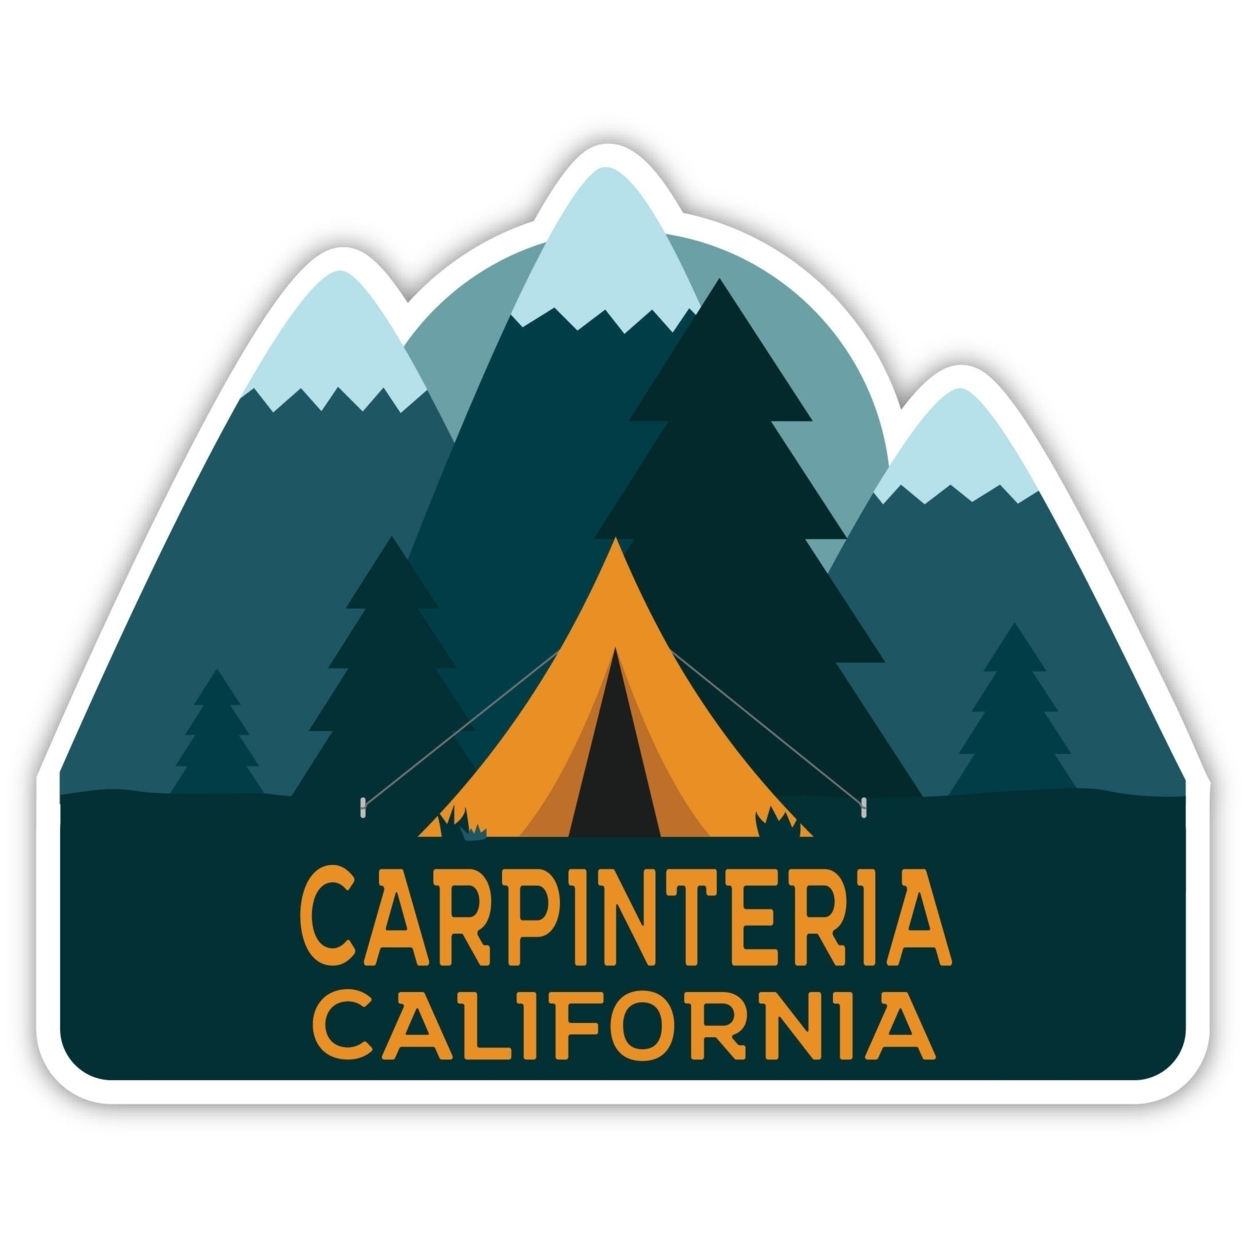 Carpinteria California Souvenir Decorative Stickers (Choose Theme And Size) - 4-Pack, 4-Inch, Tent